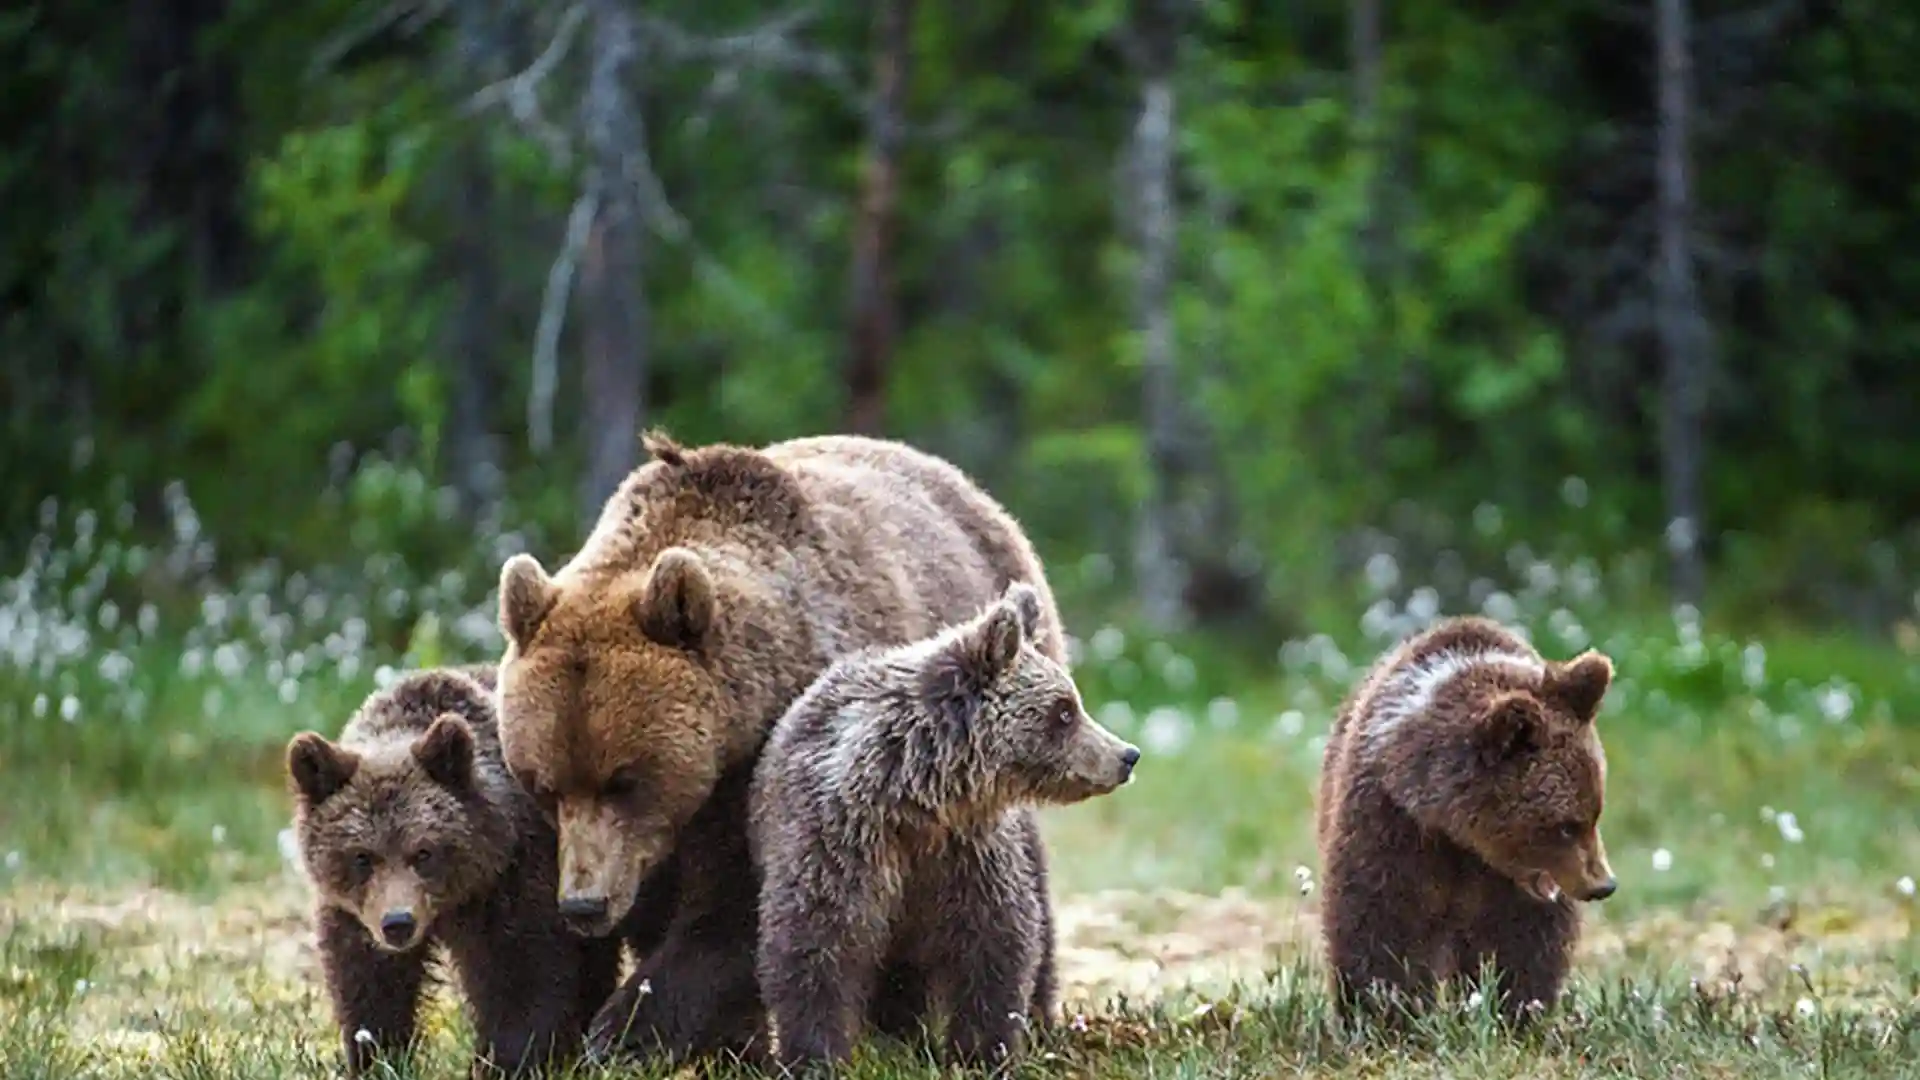 Big bear and cubs walk through meadow.